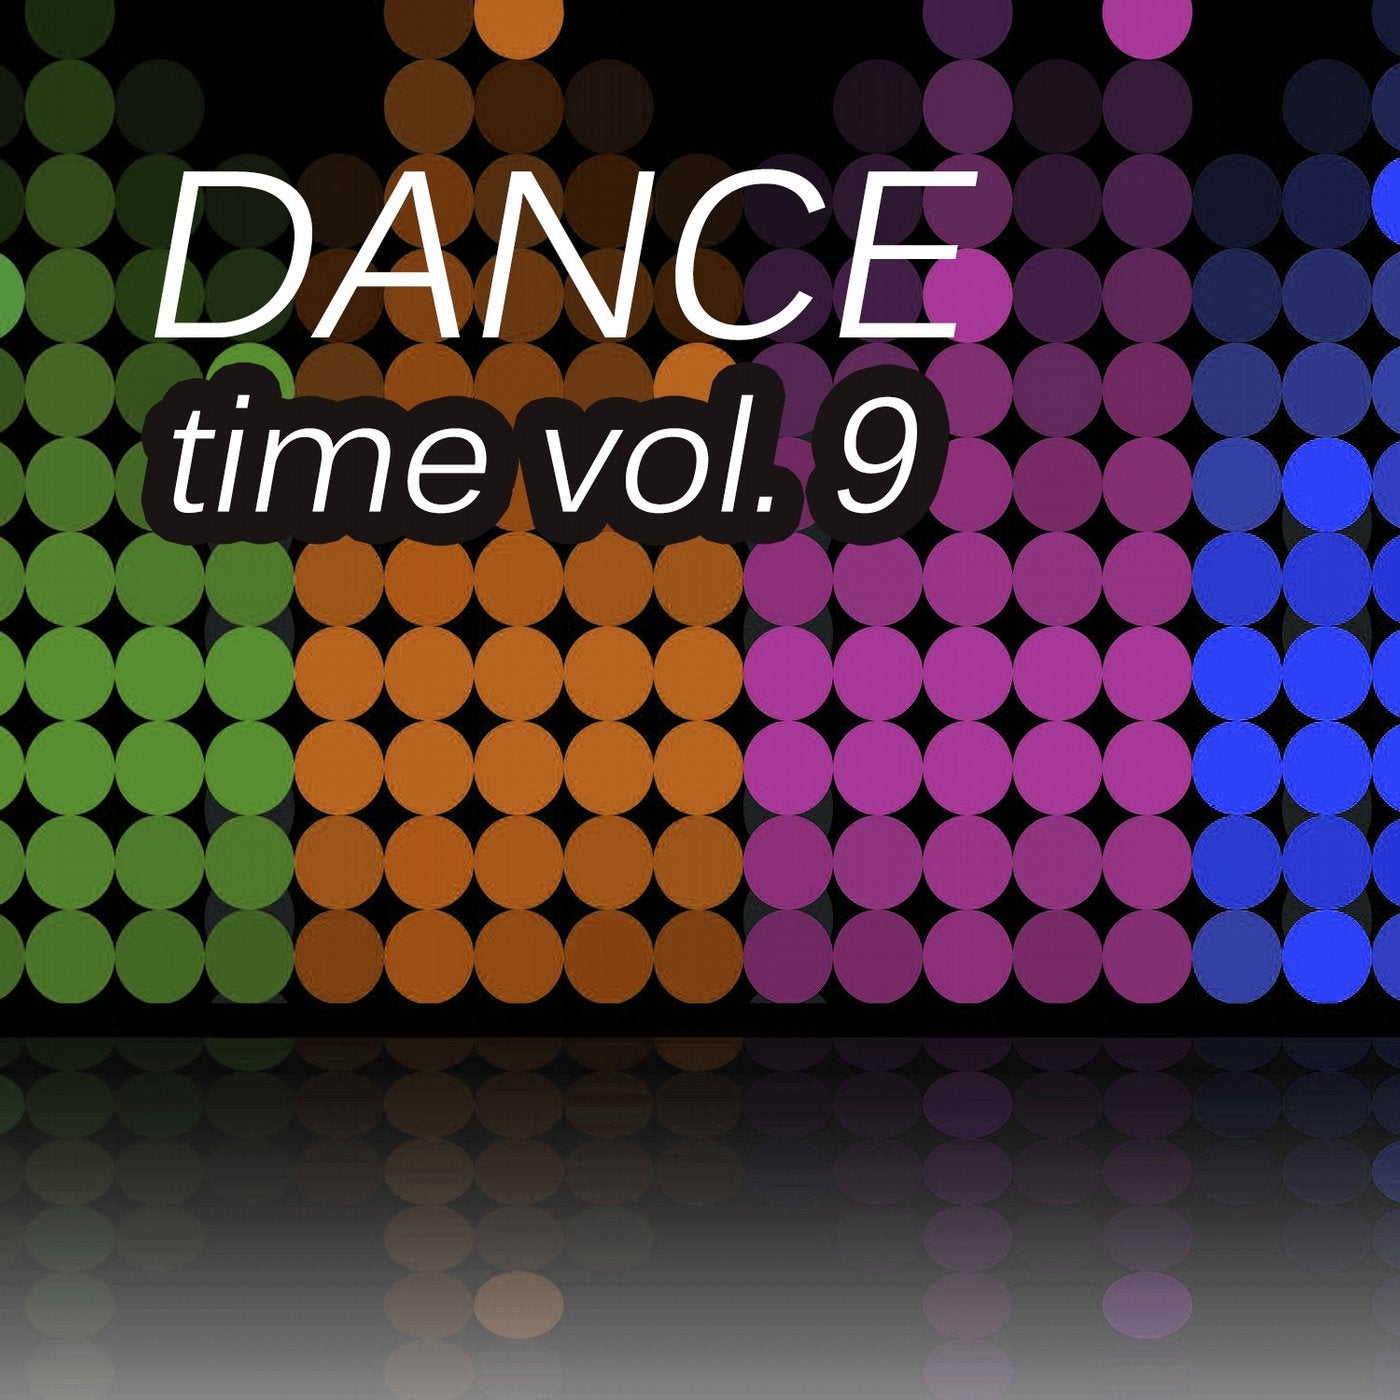 Dance Time Vol. 9